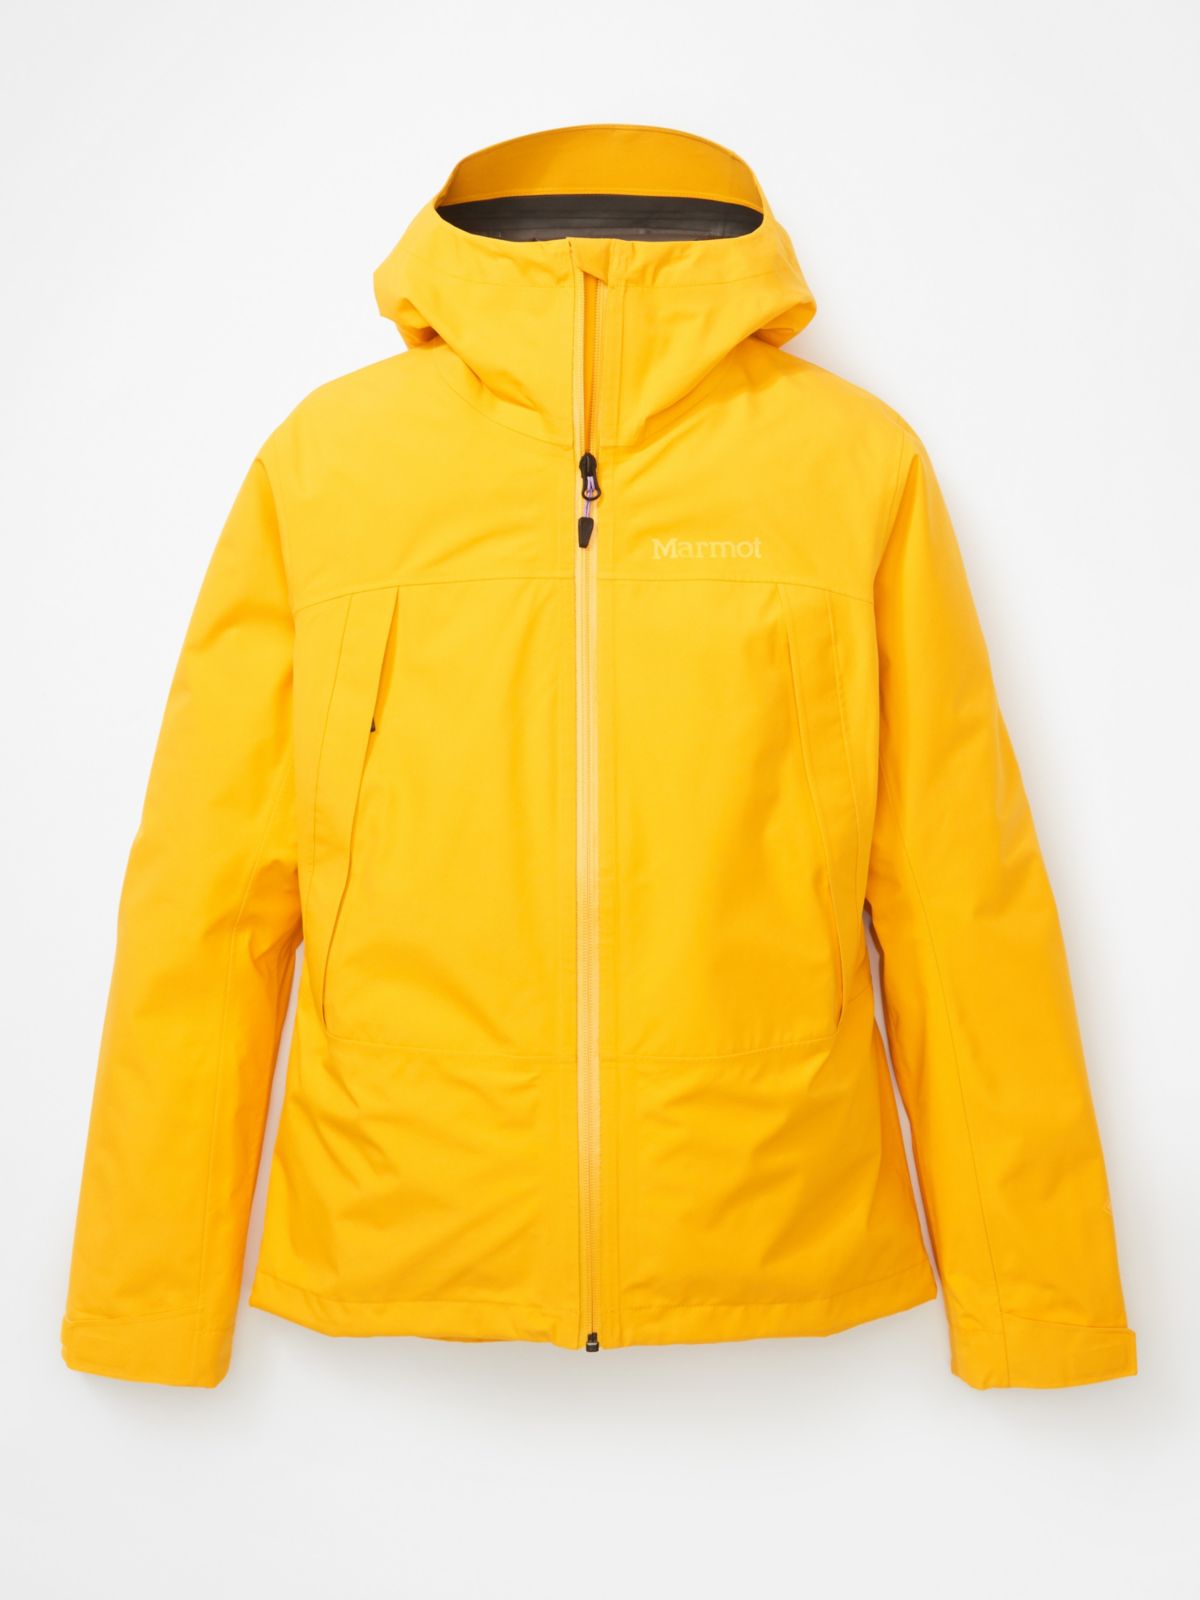 Marmot hooded jacket in yellow